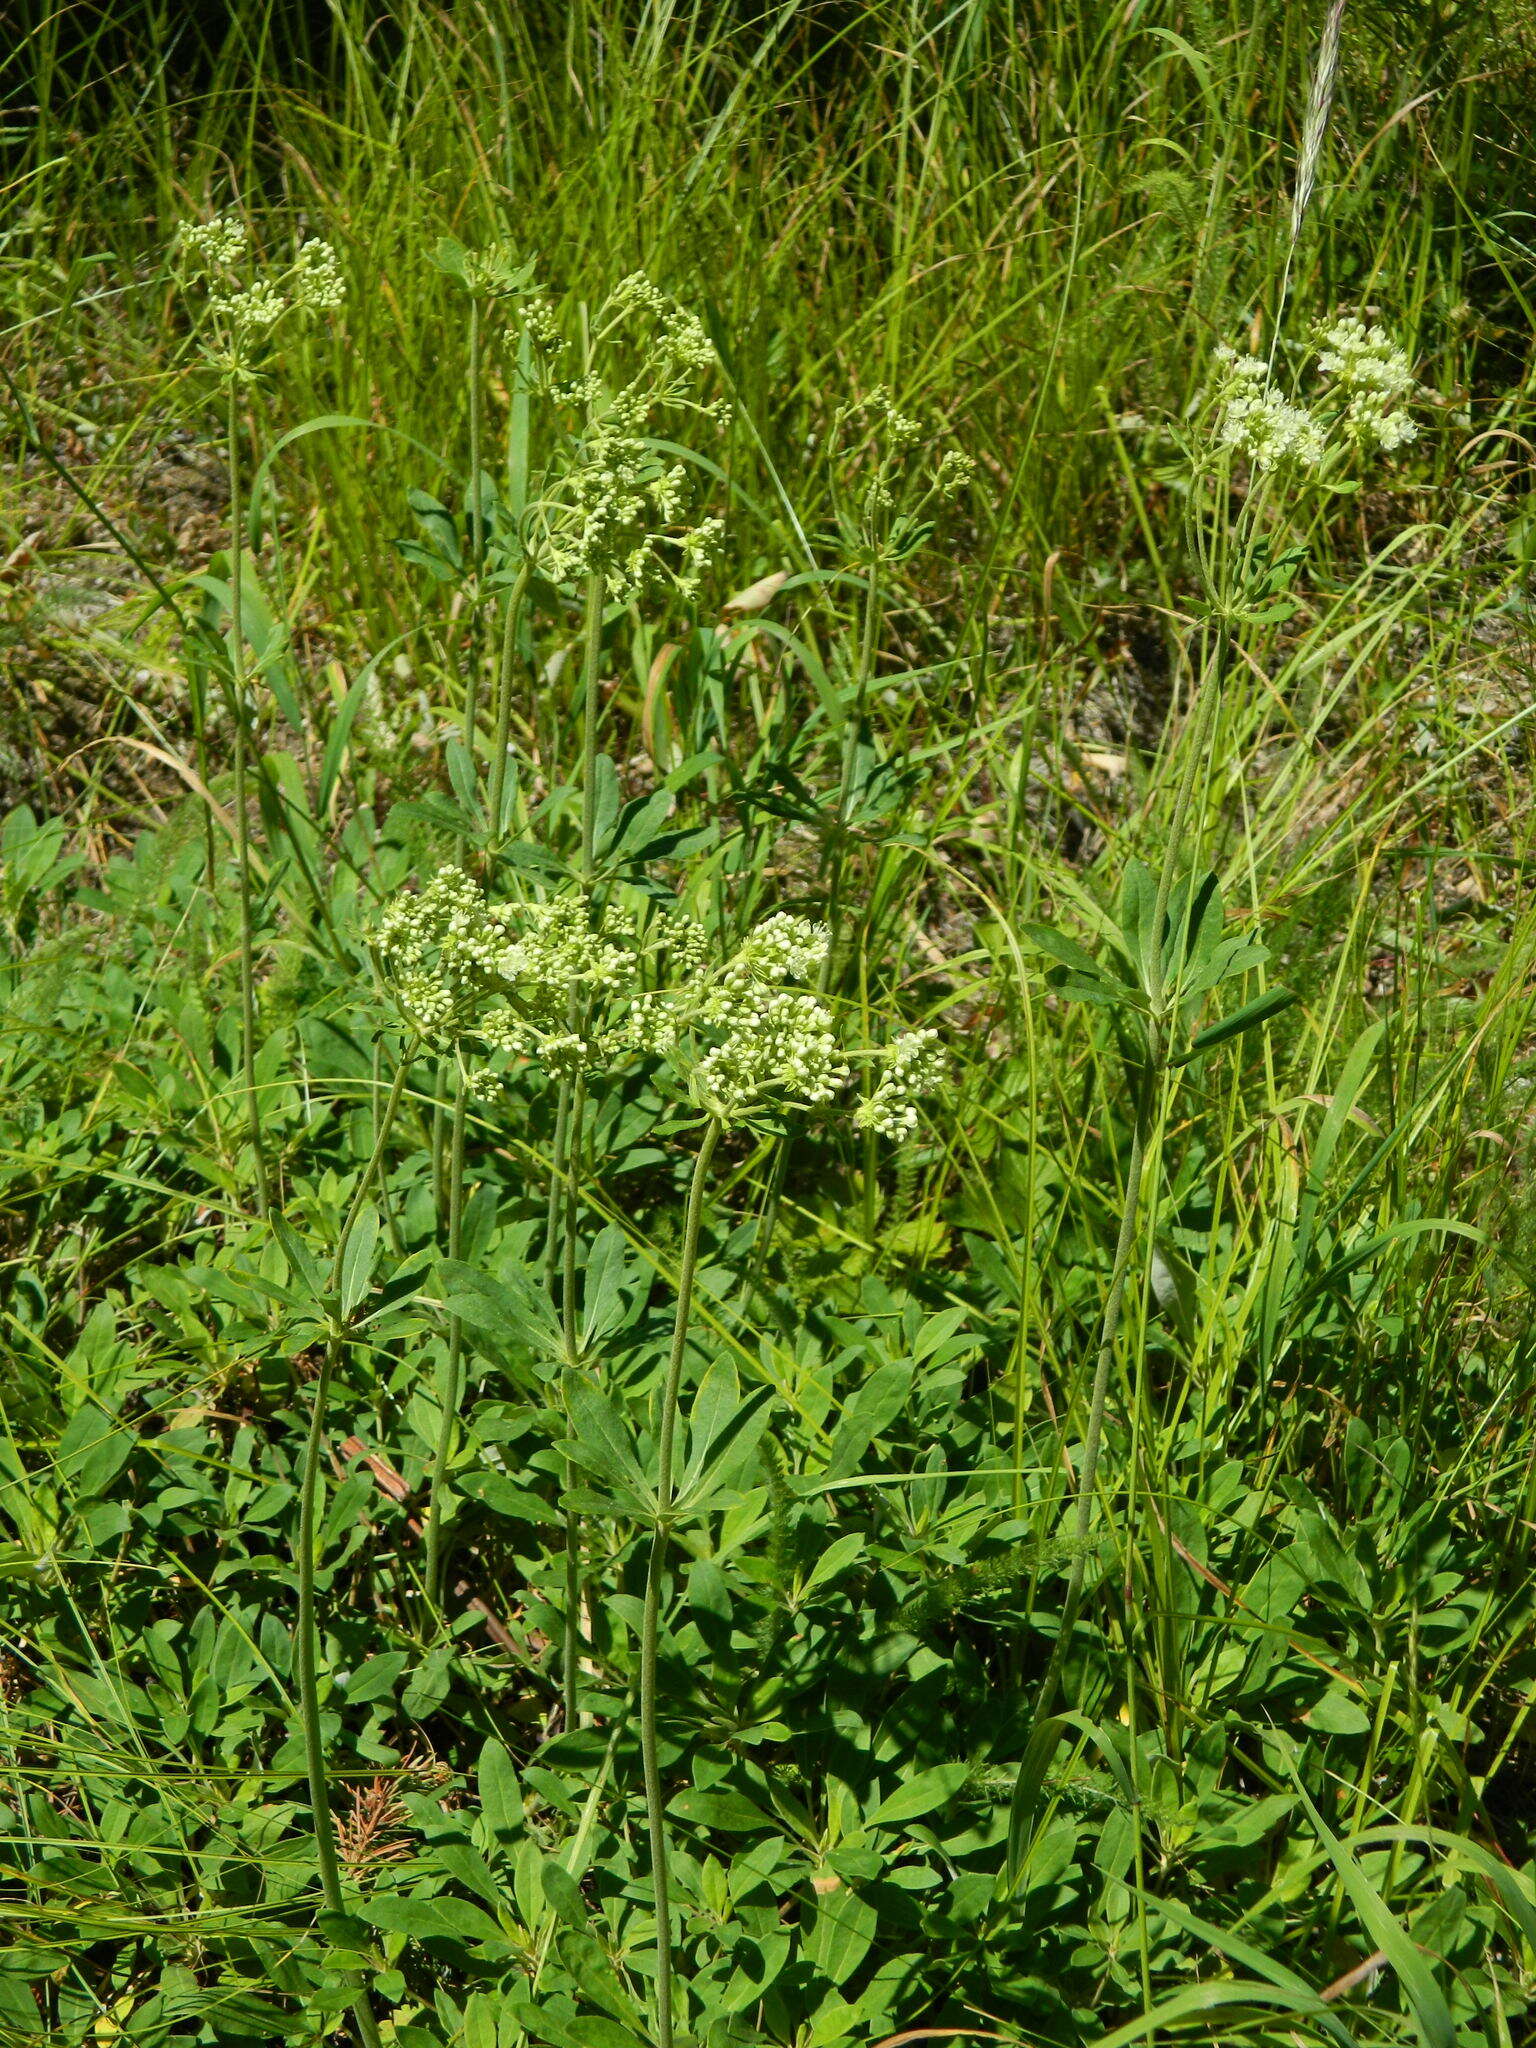 Image of parsnipflower buckwheat